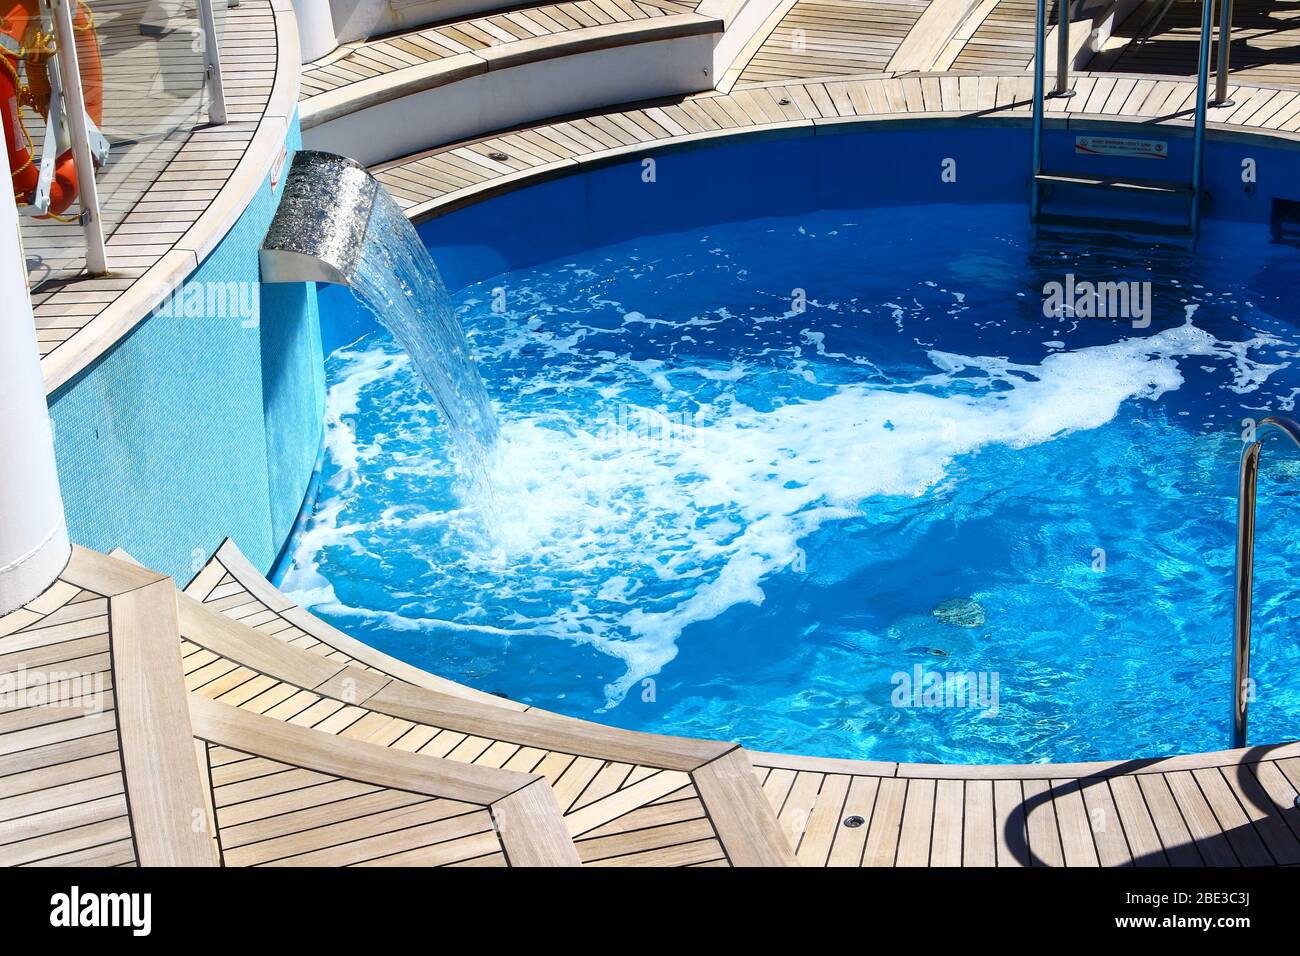 Swimmingpool auf einem Kreizfahrtschiff Foto Stock